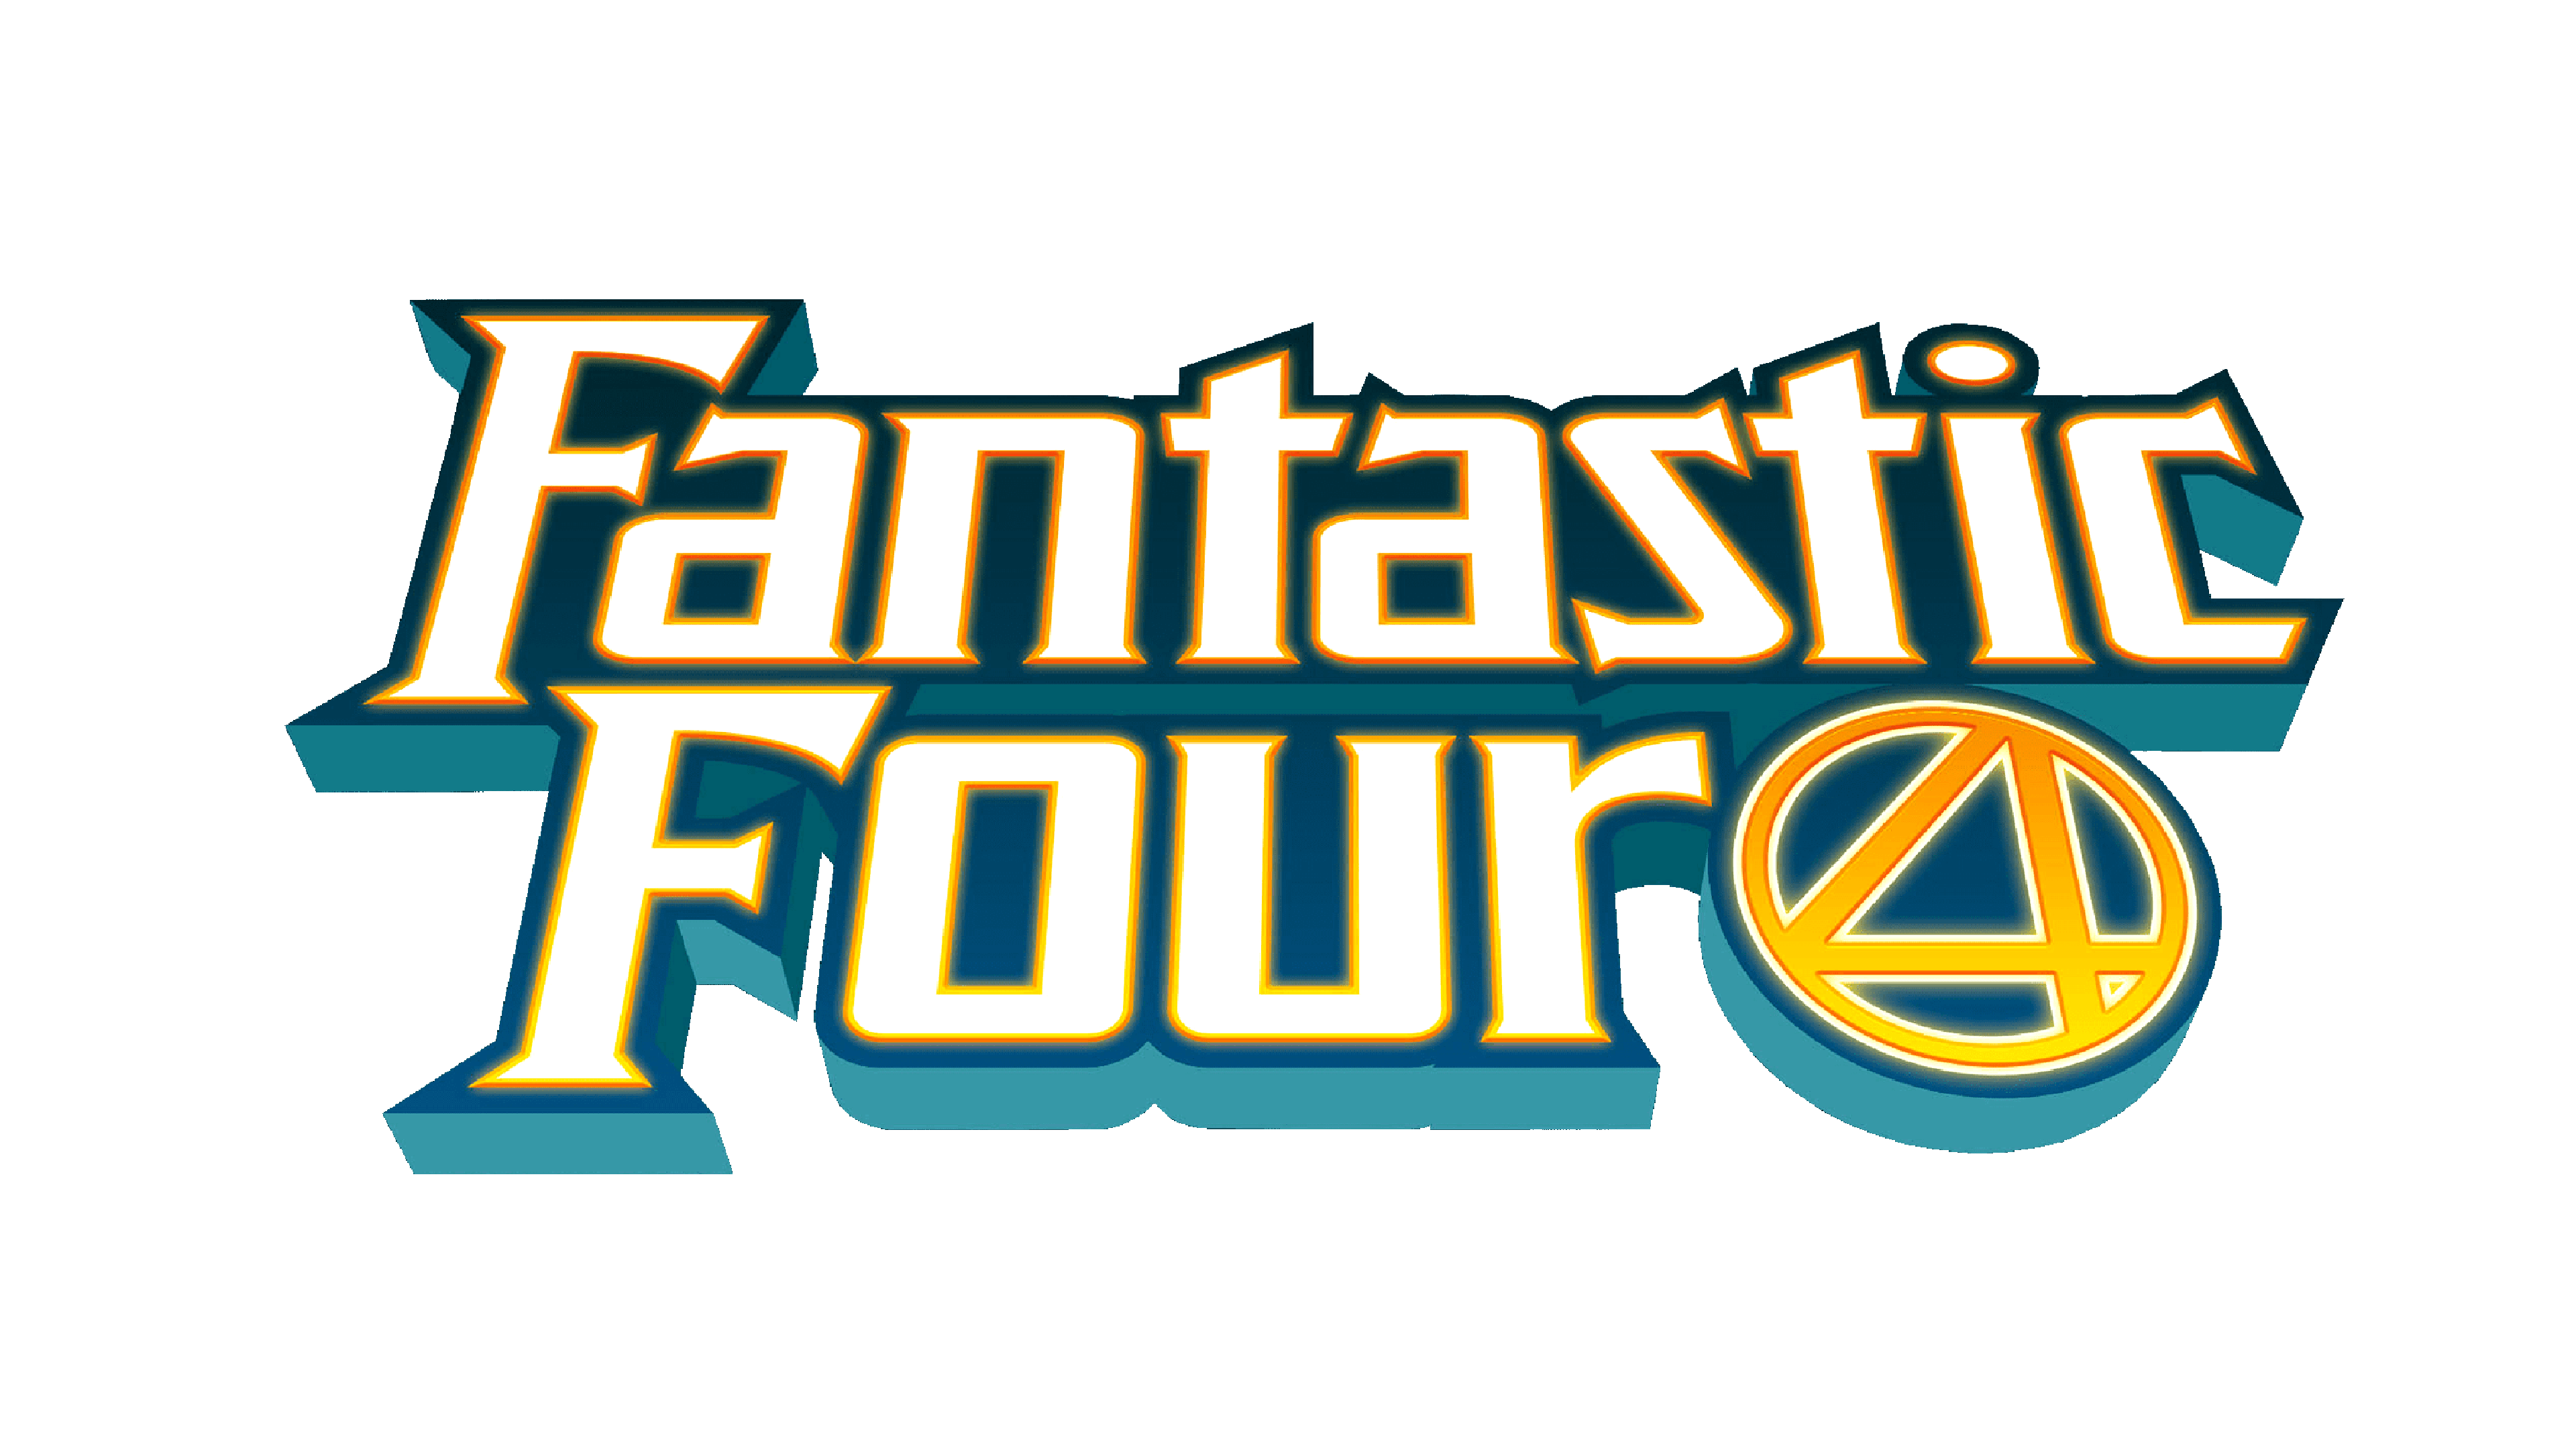 Sticker emblem, logo Fantastic Four – StickersMag